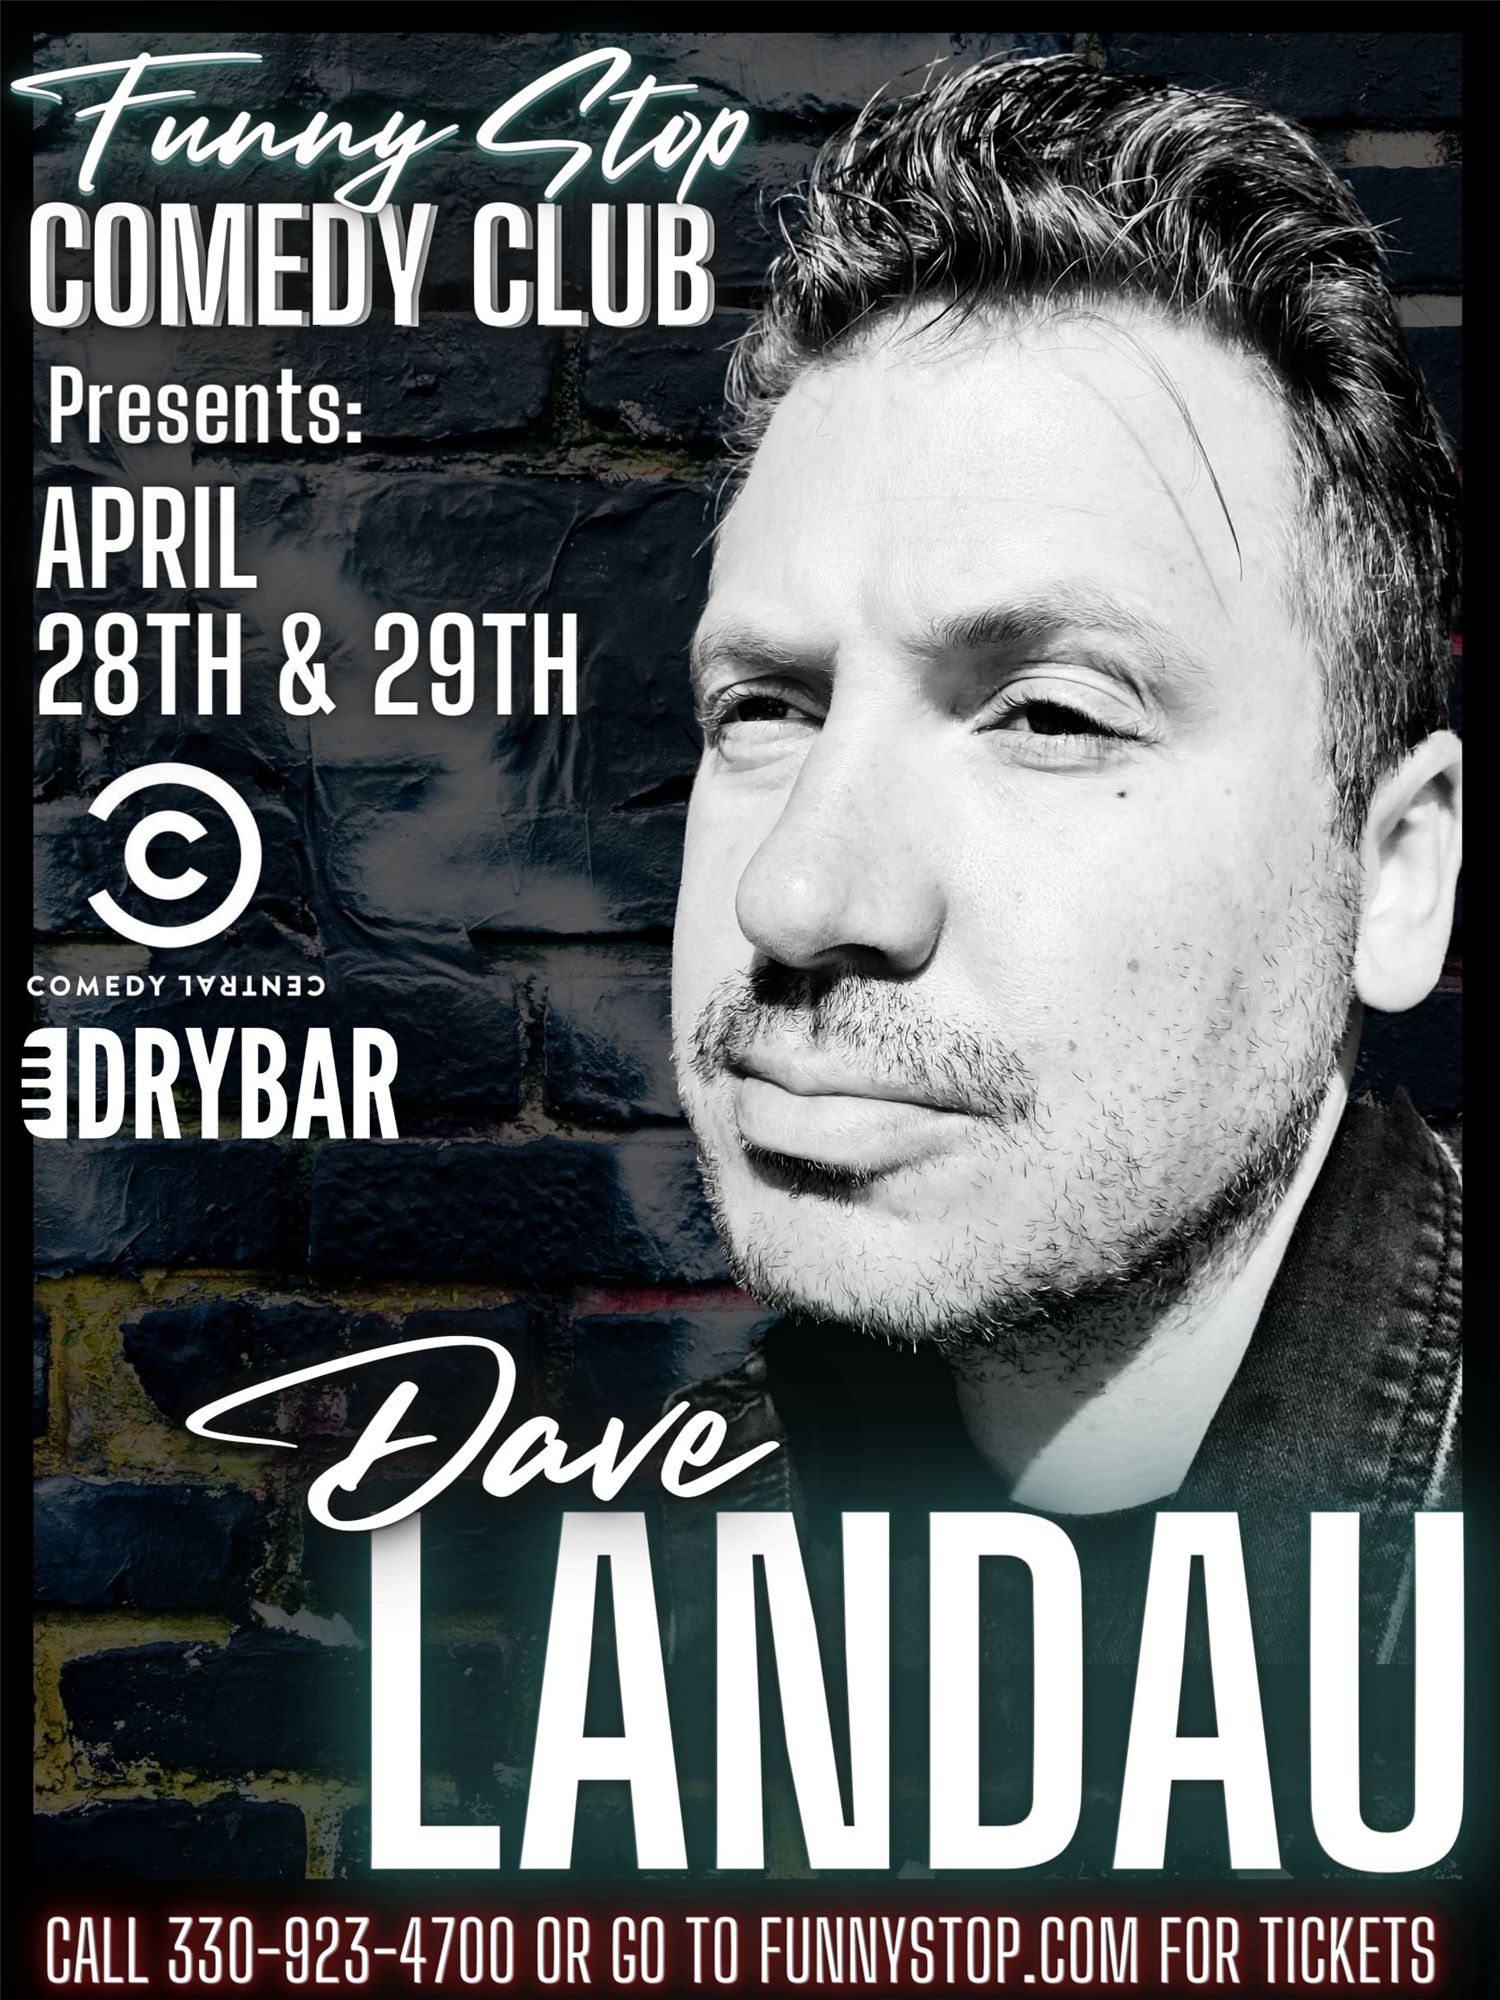 Dave Landau Fri. 7:30 Show Funny Stop Comedy Club on avr. 28, 19:30@Funny Stop Comedy Club - Achetez des billets et obtenez des informations surFunny Stop funnystop.online